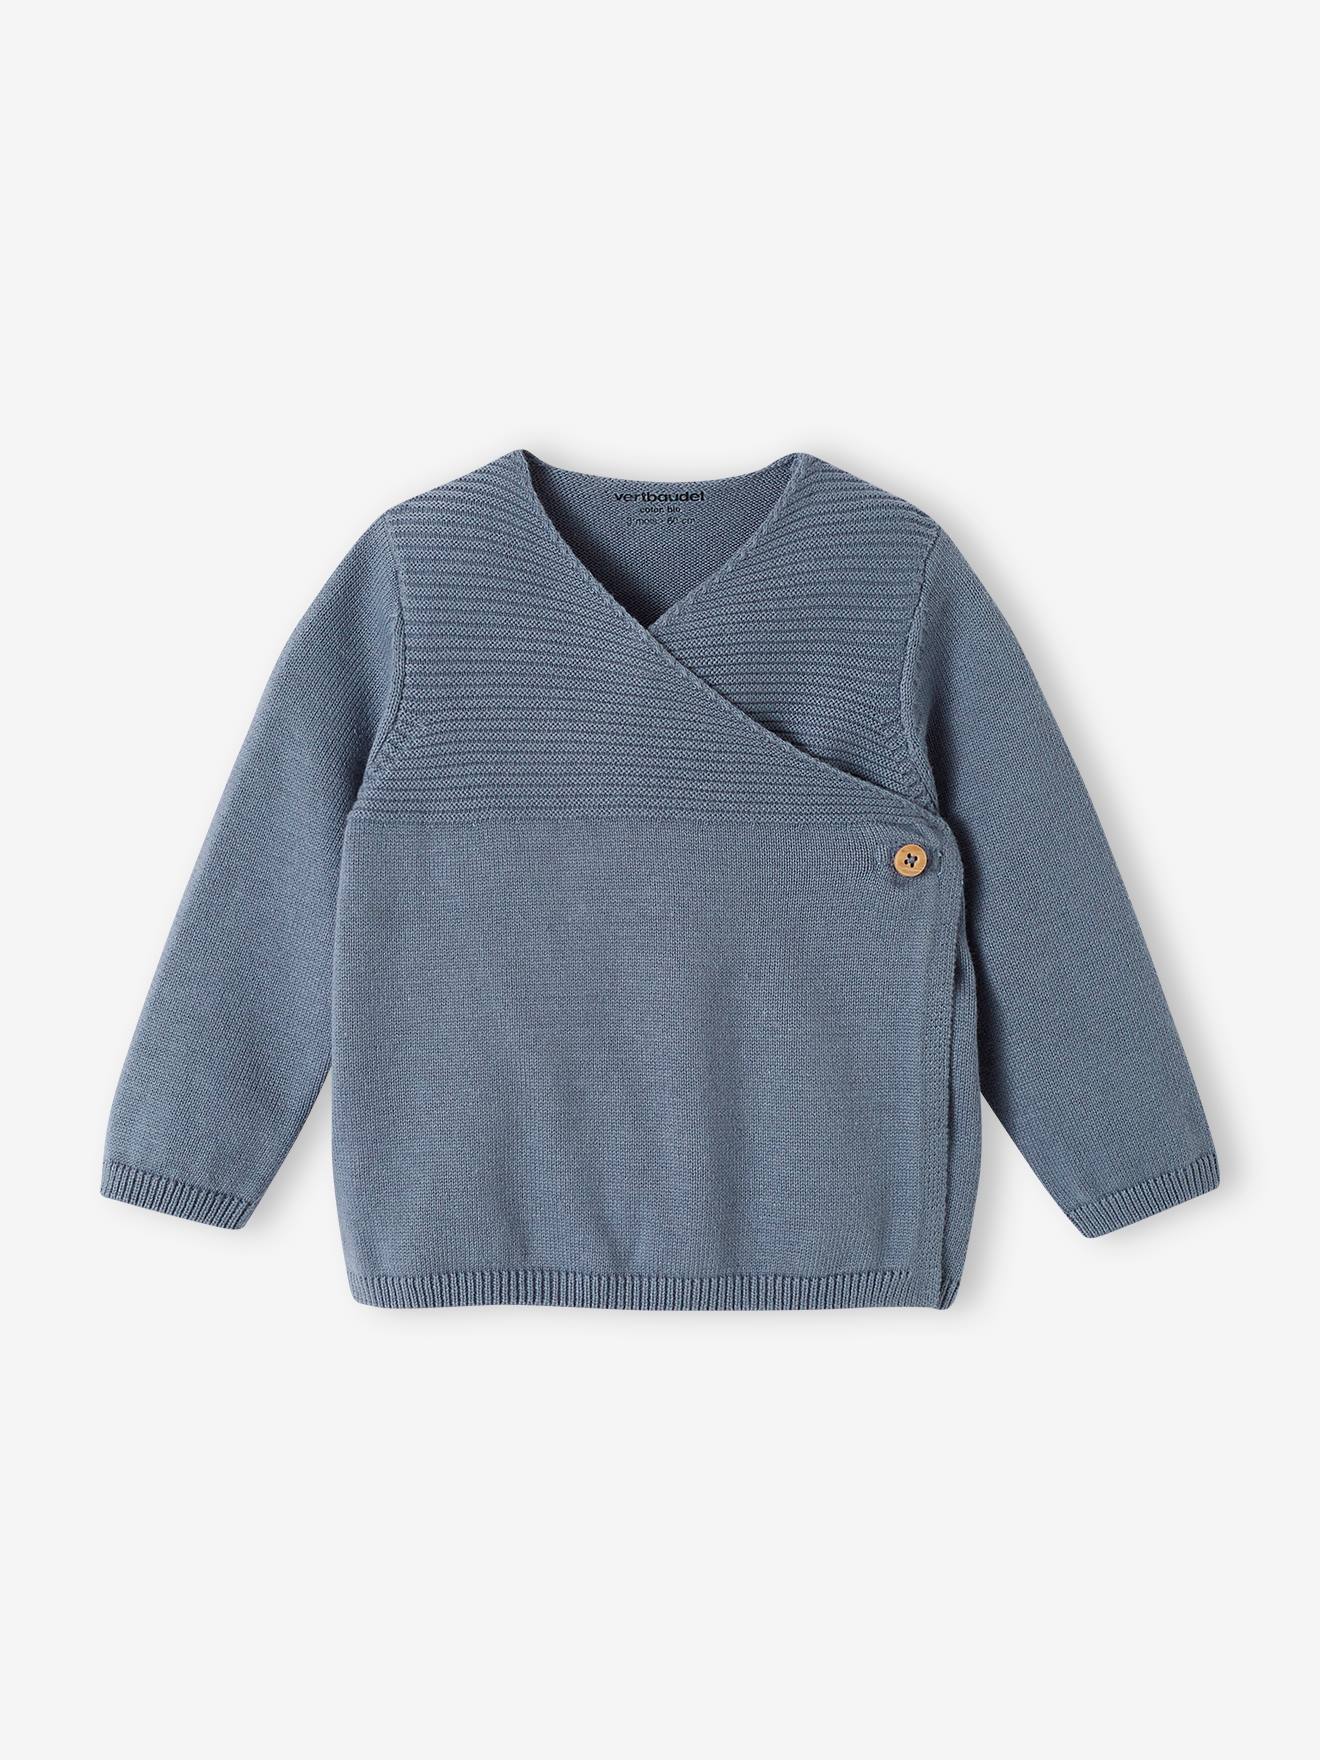 Knitted Cardigan in Organic Cotton for Newborn Babies denim blue